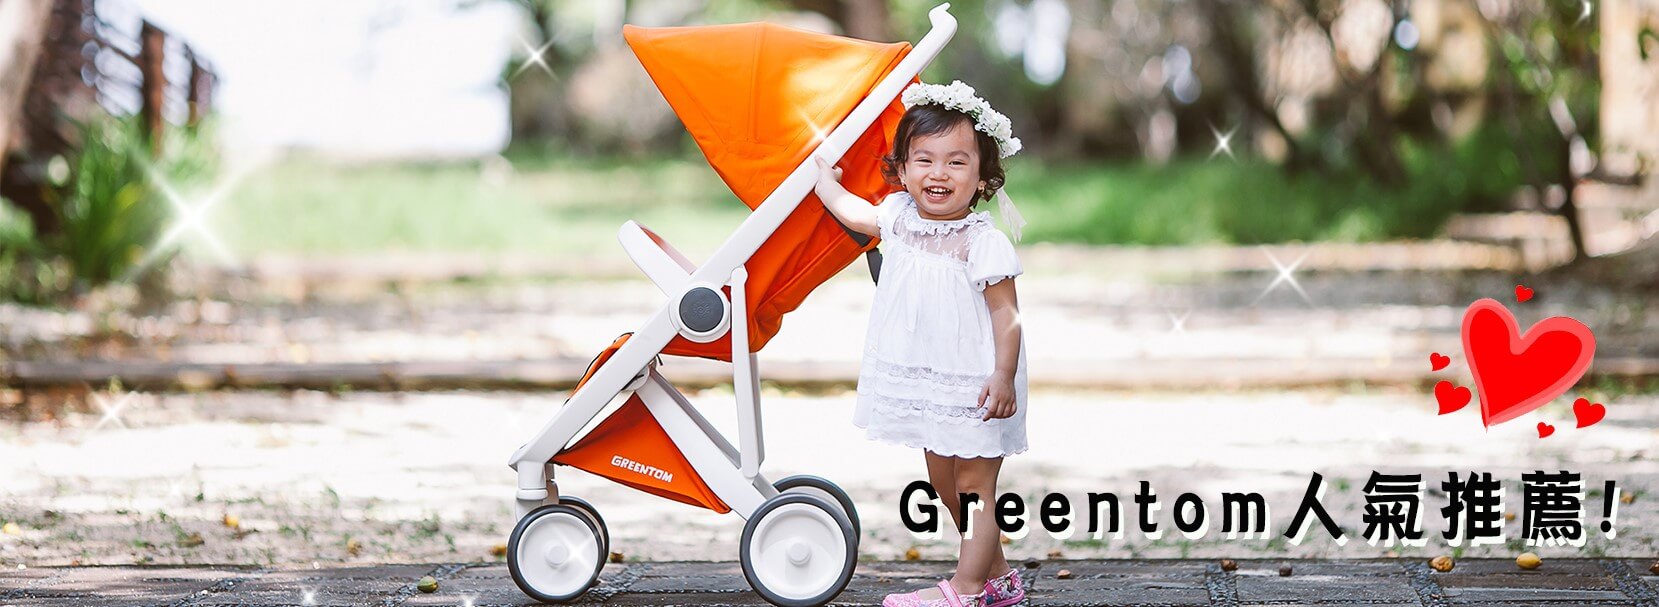 Greentom,嬰兒推車推薦,時尚配件,嬰兒推車品牌,嬰兒推車2018